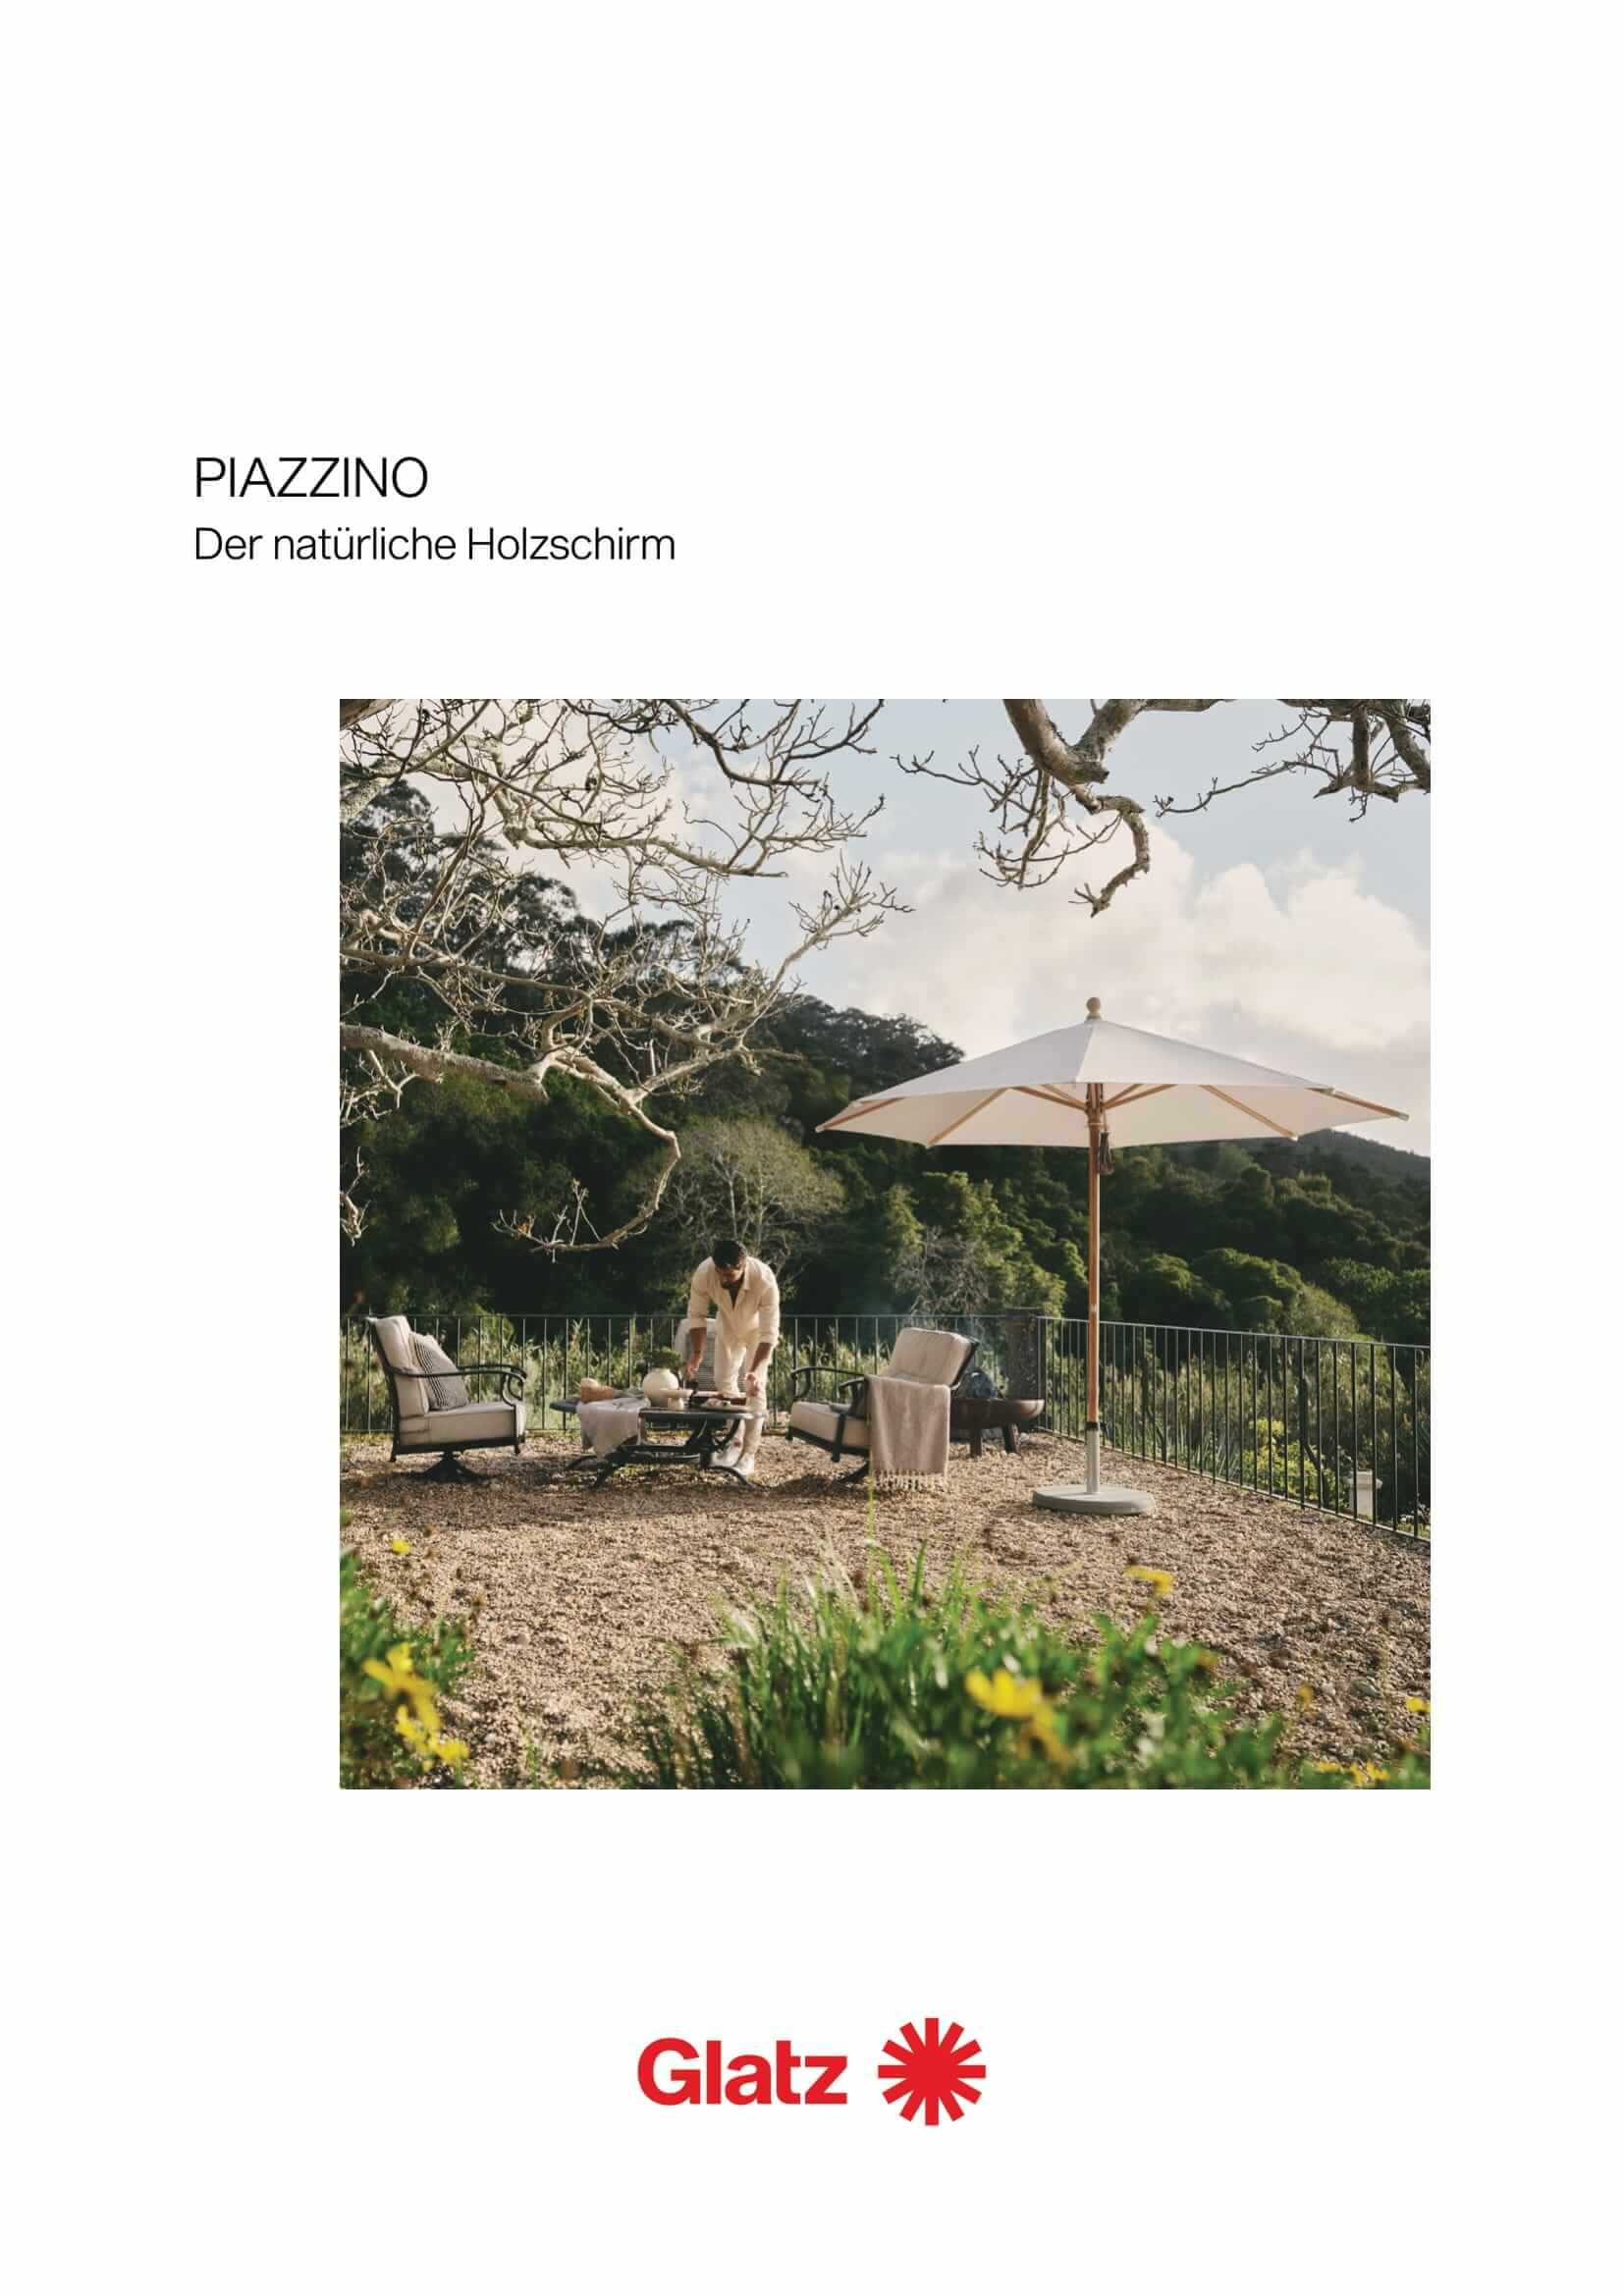 Glatz-Piazzino-Produktprospekt